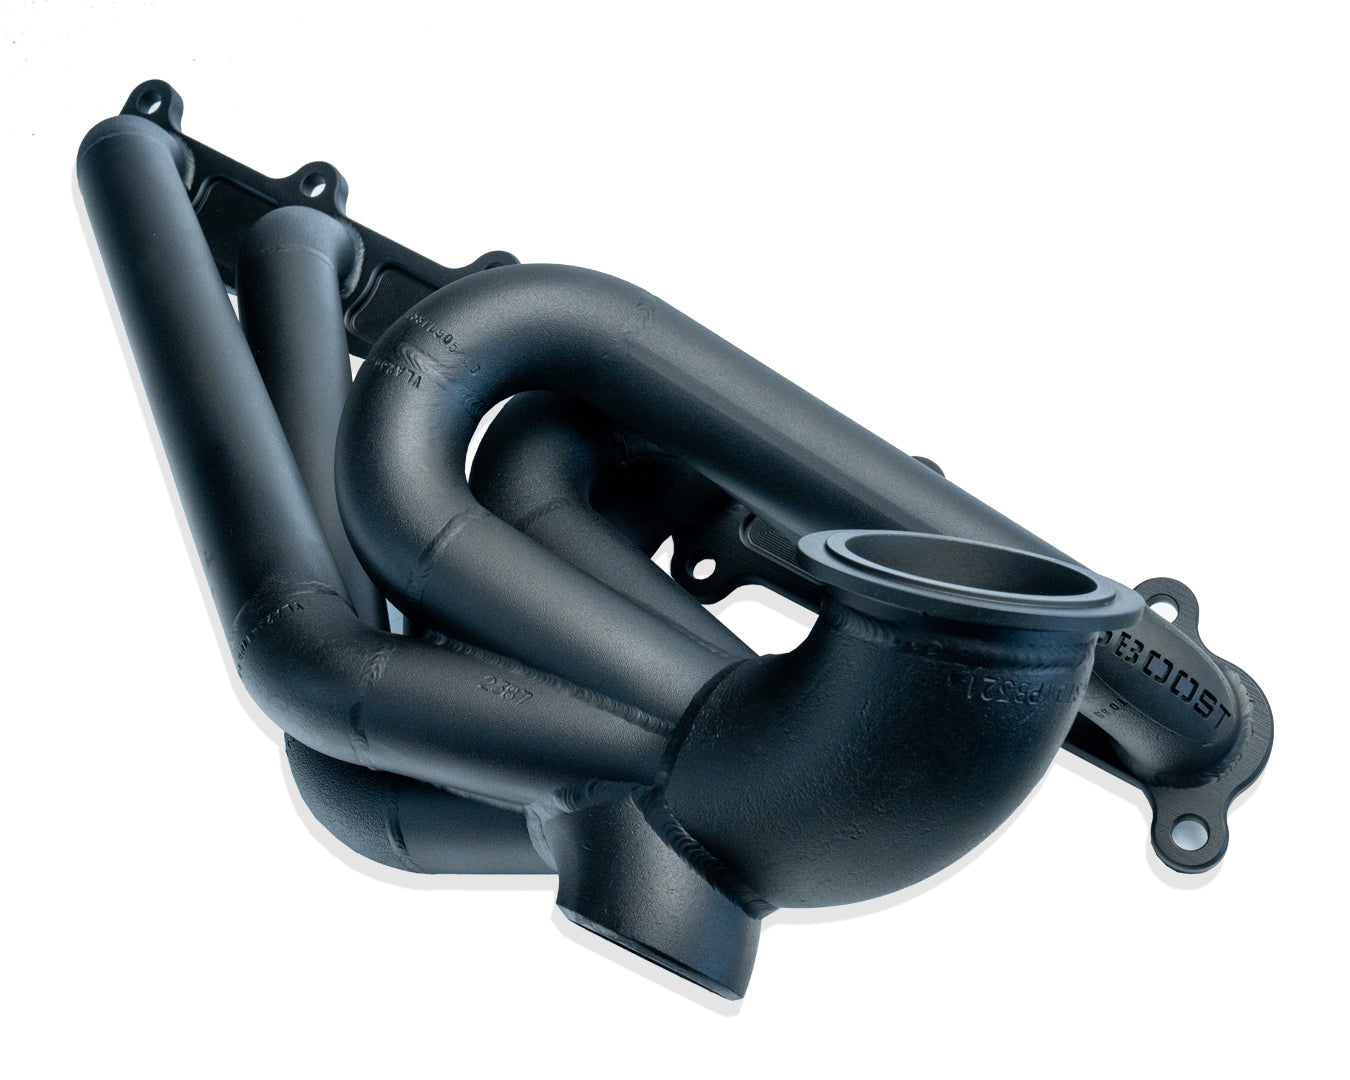 Ford Barra BA-FG Forward Position Promod Exhaust Manifold